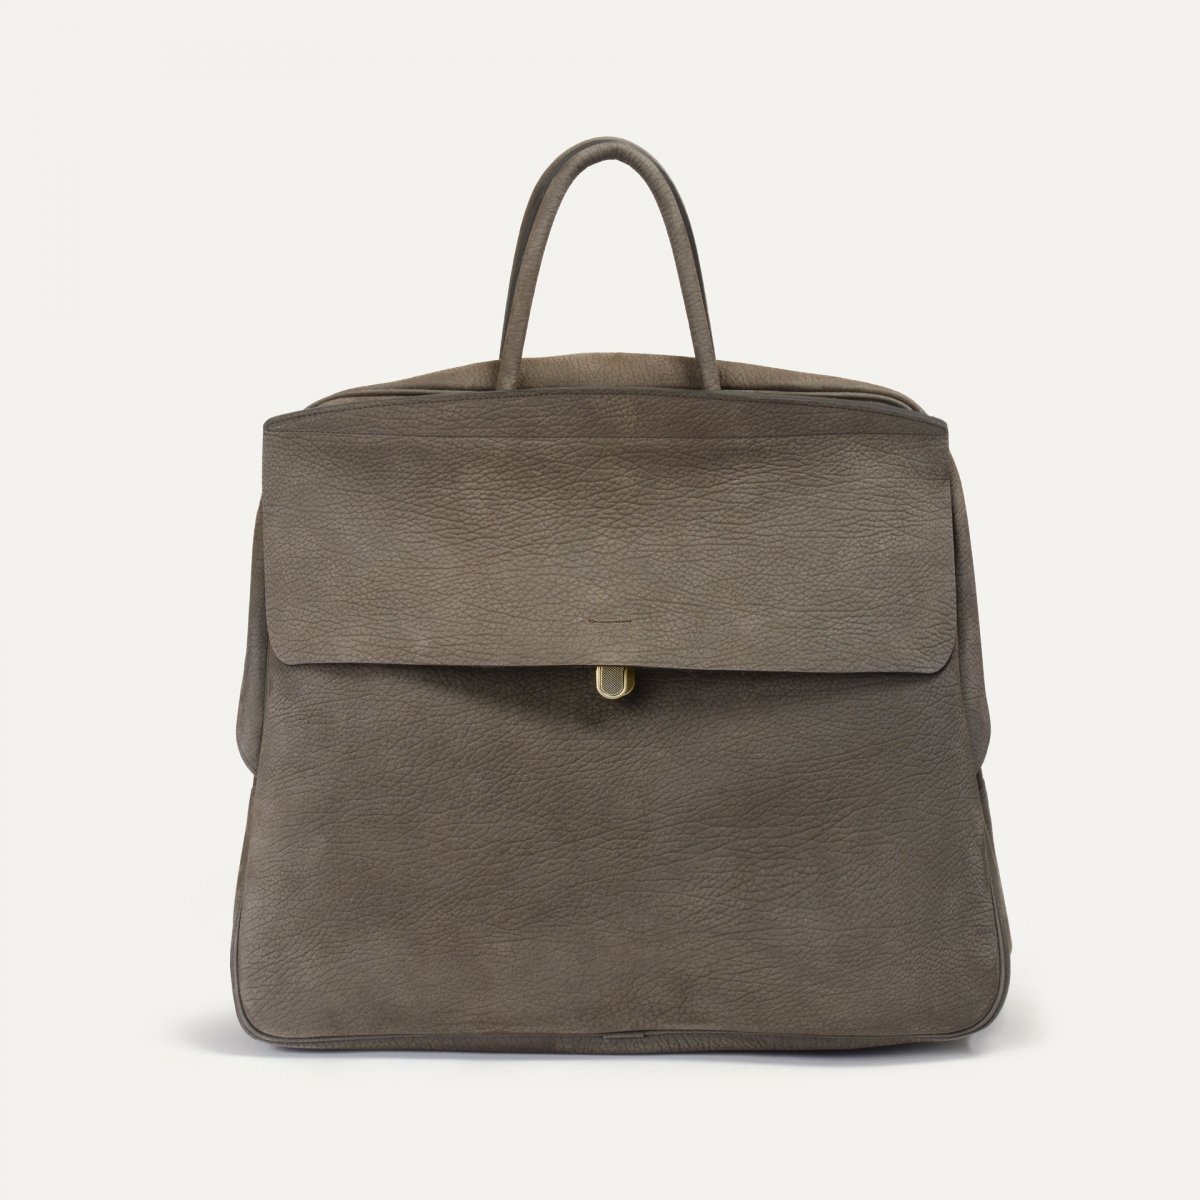 Zoom Travel bag - Soft Khaki brown (image n°2)